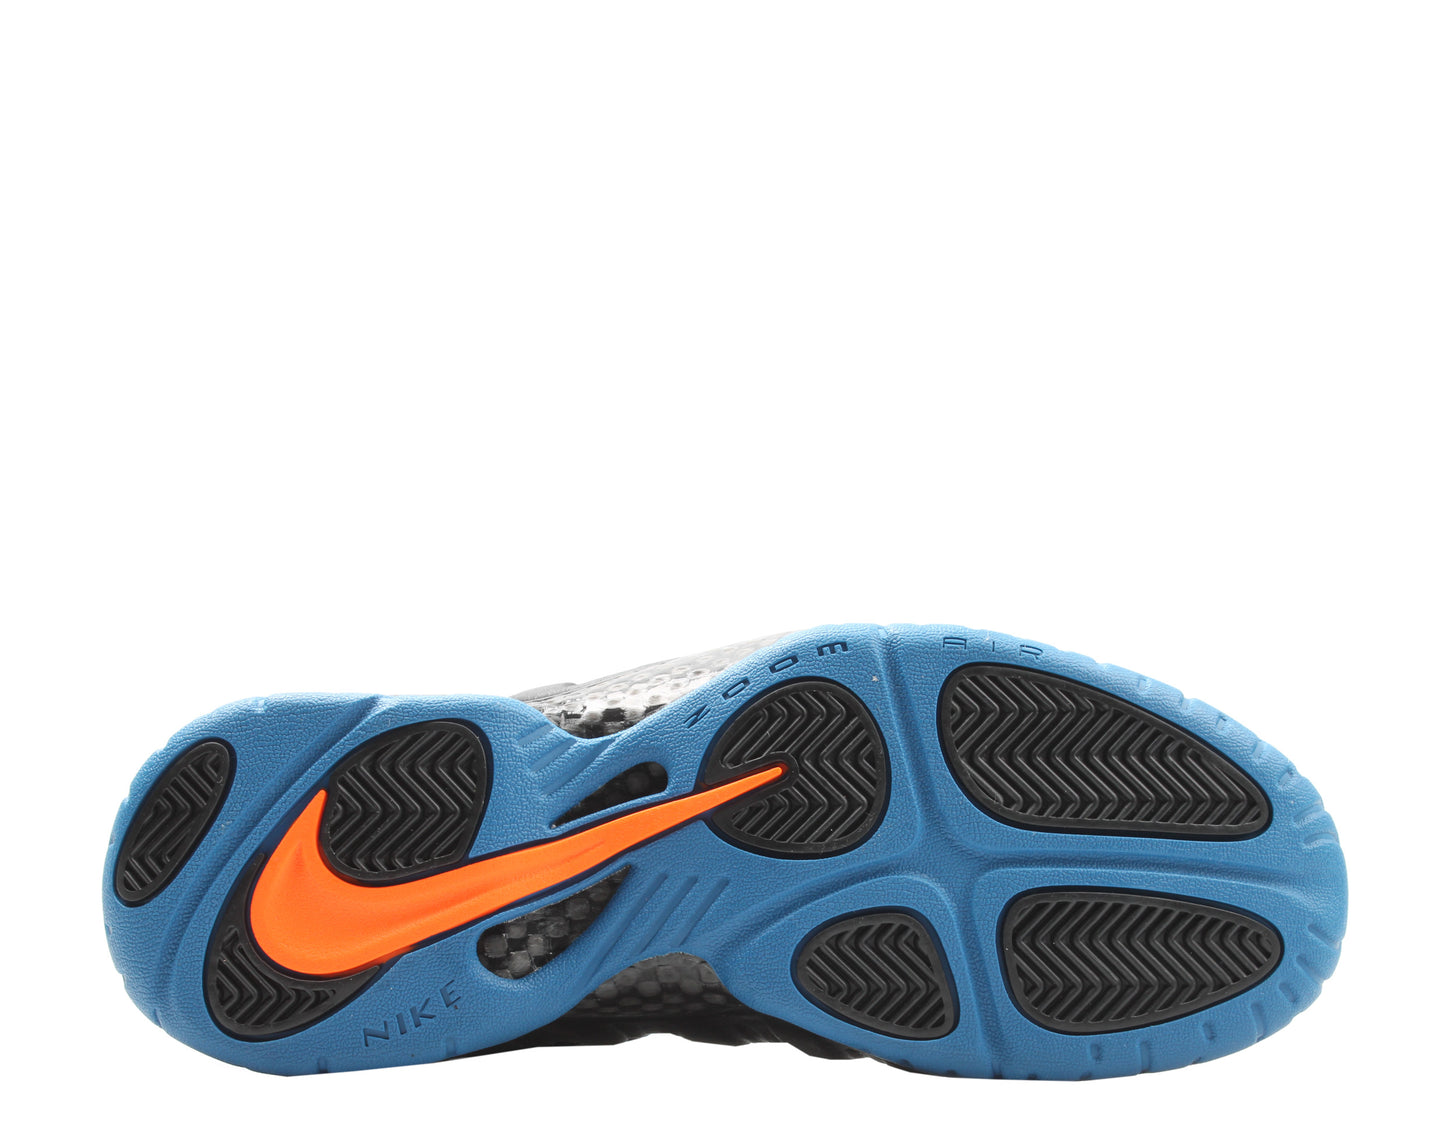 Nike Air Foamposite Pro Knicks Black/Orange Men's Basketball Shoes 624041-010